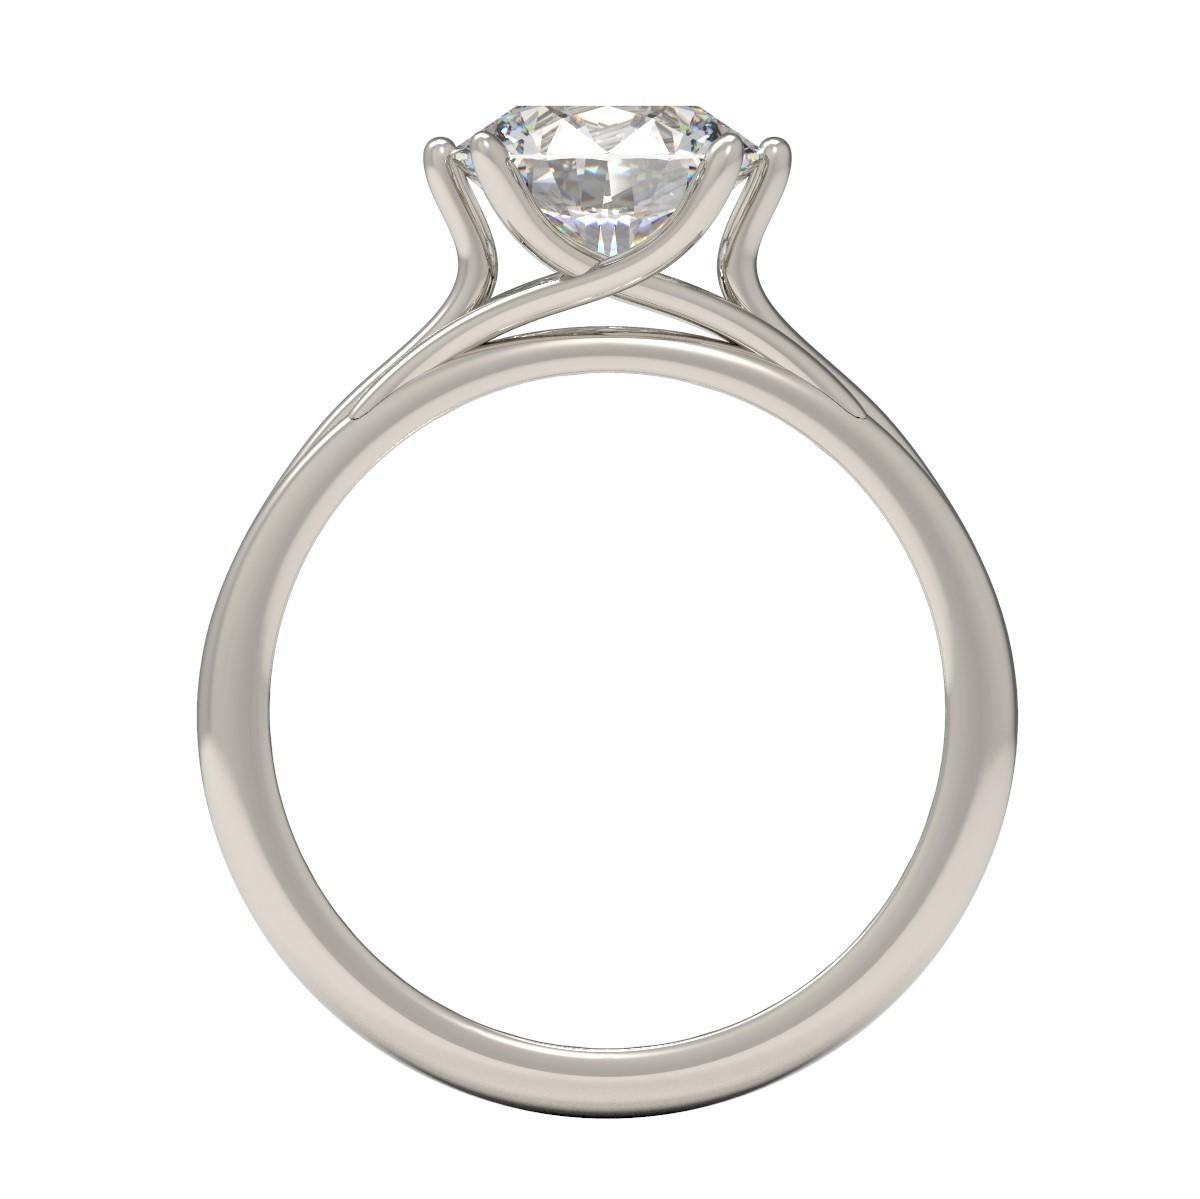 Kian Design Platinum 1.85 Carat GIA Round Brilliant Cut Diamond Engagement Ring In New Condition For Sale In South Perth, AU